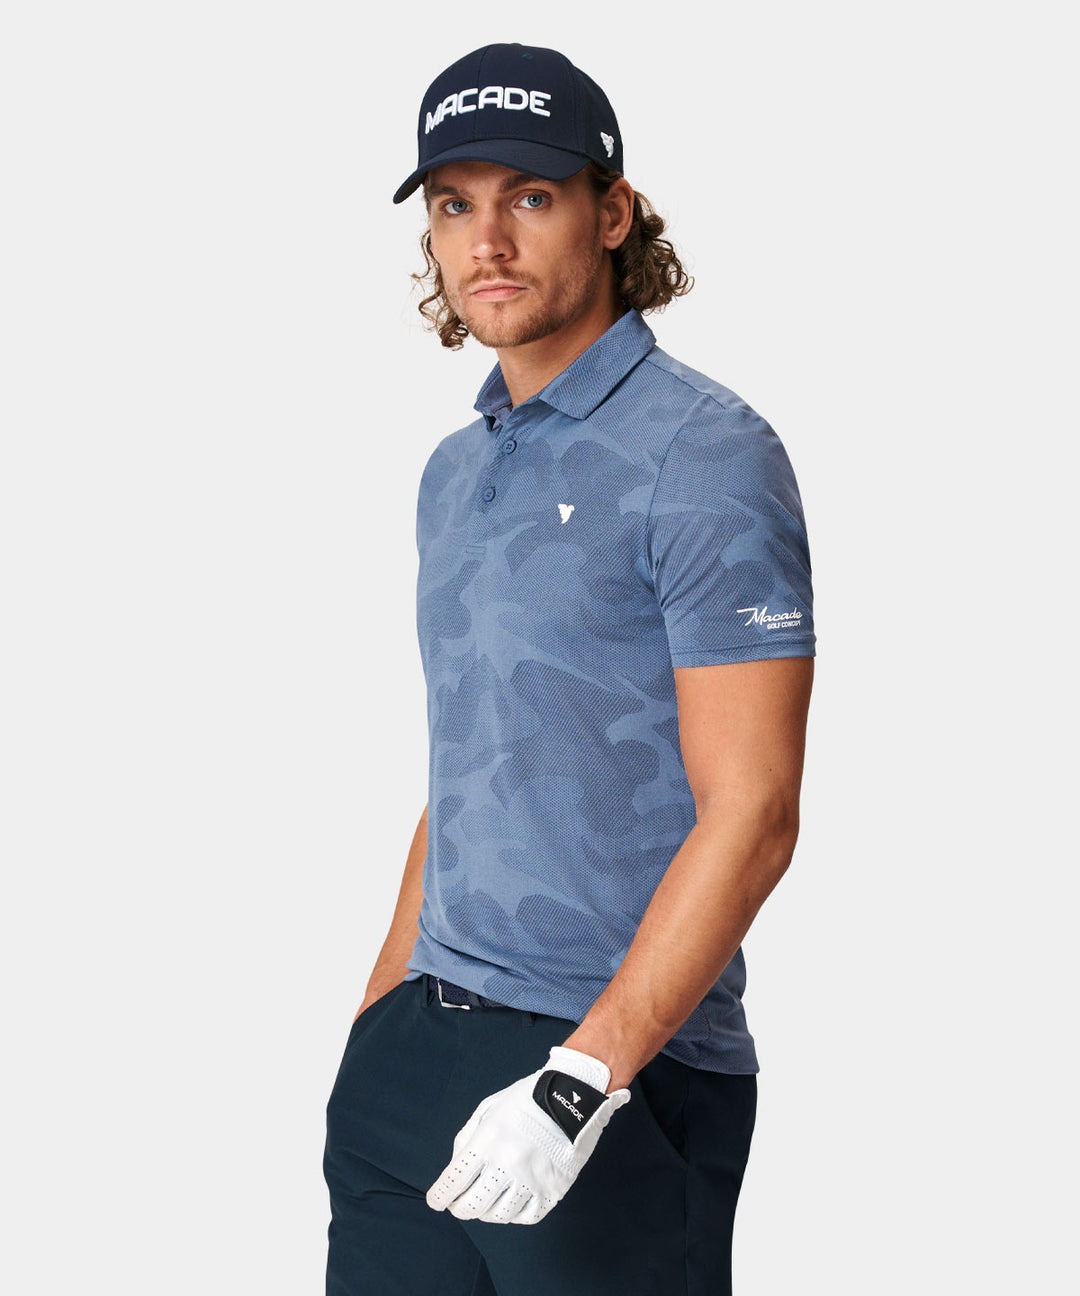 Nolan Stone Blue Camo Shirt Macade Golf